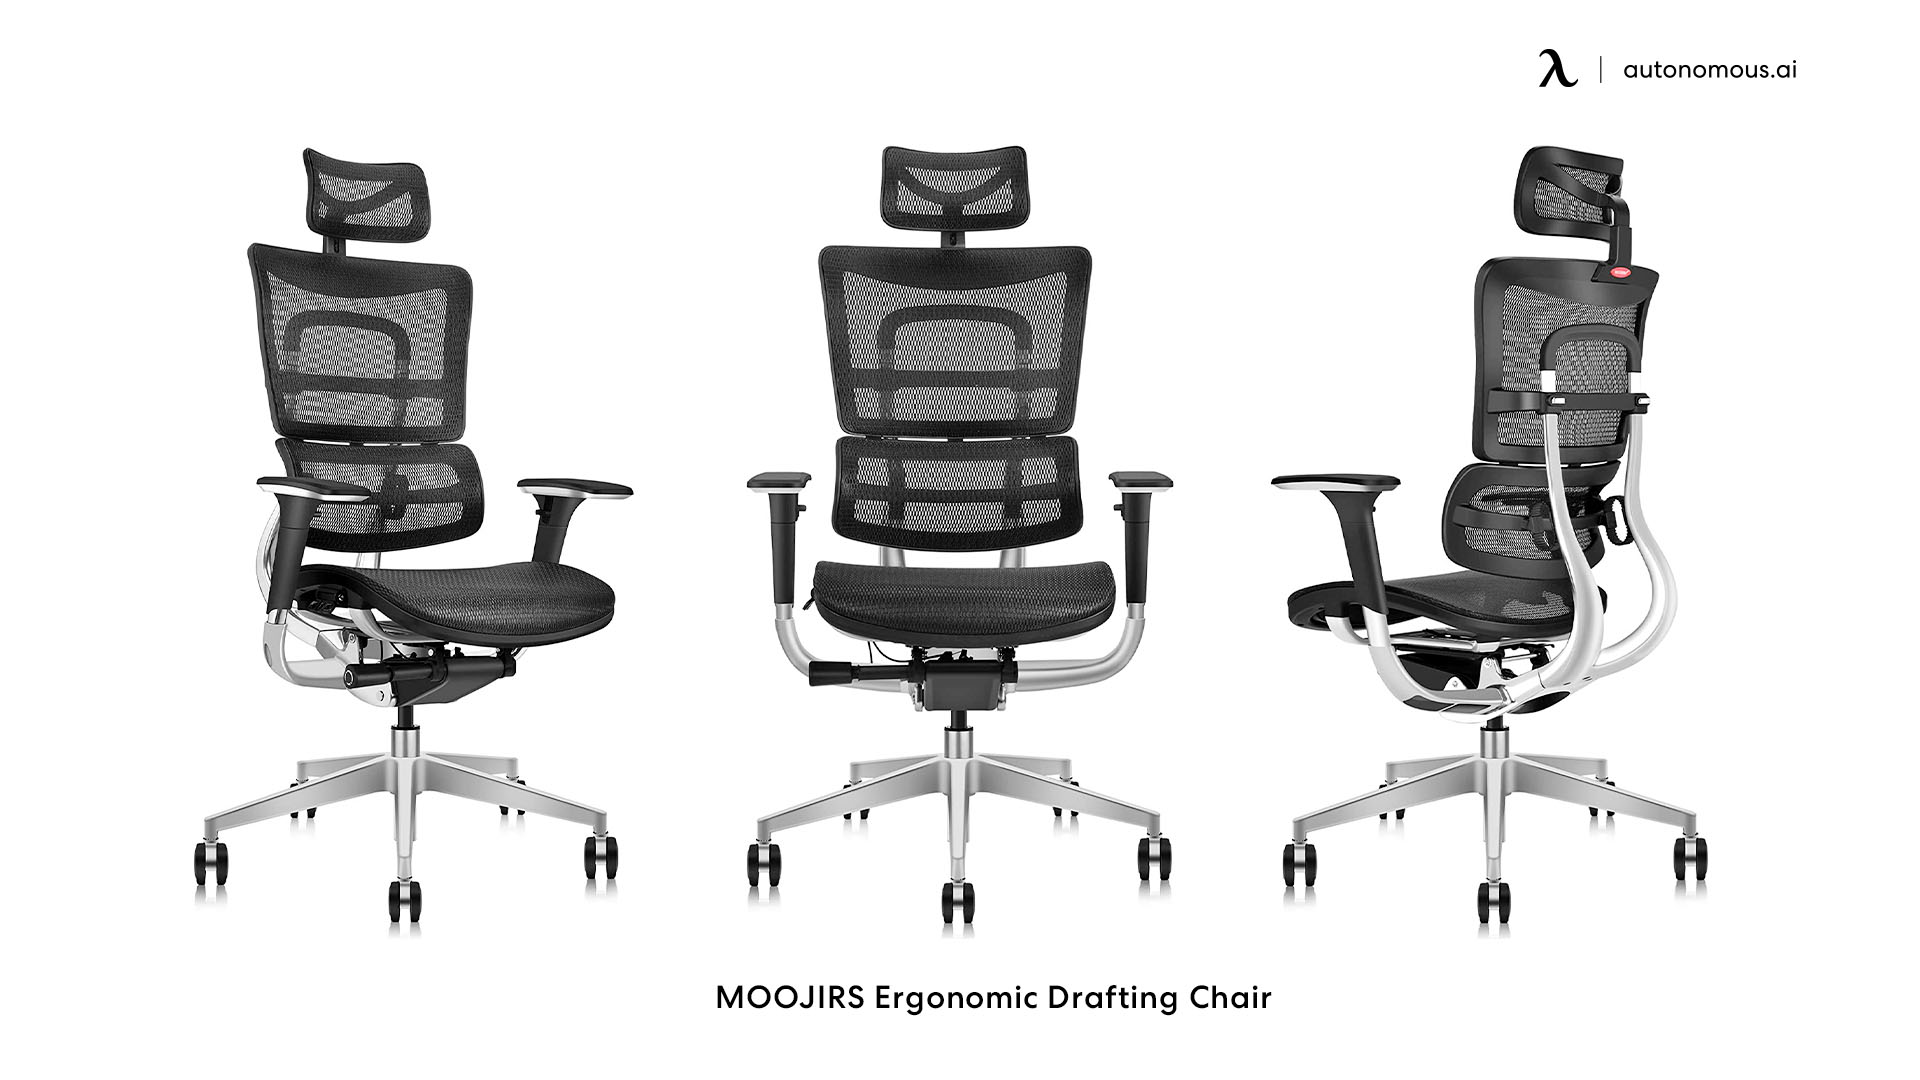 MOOJIRS sturdy office chairs